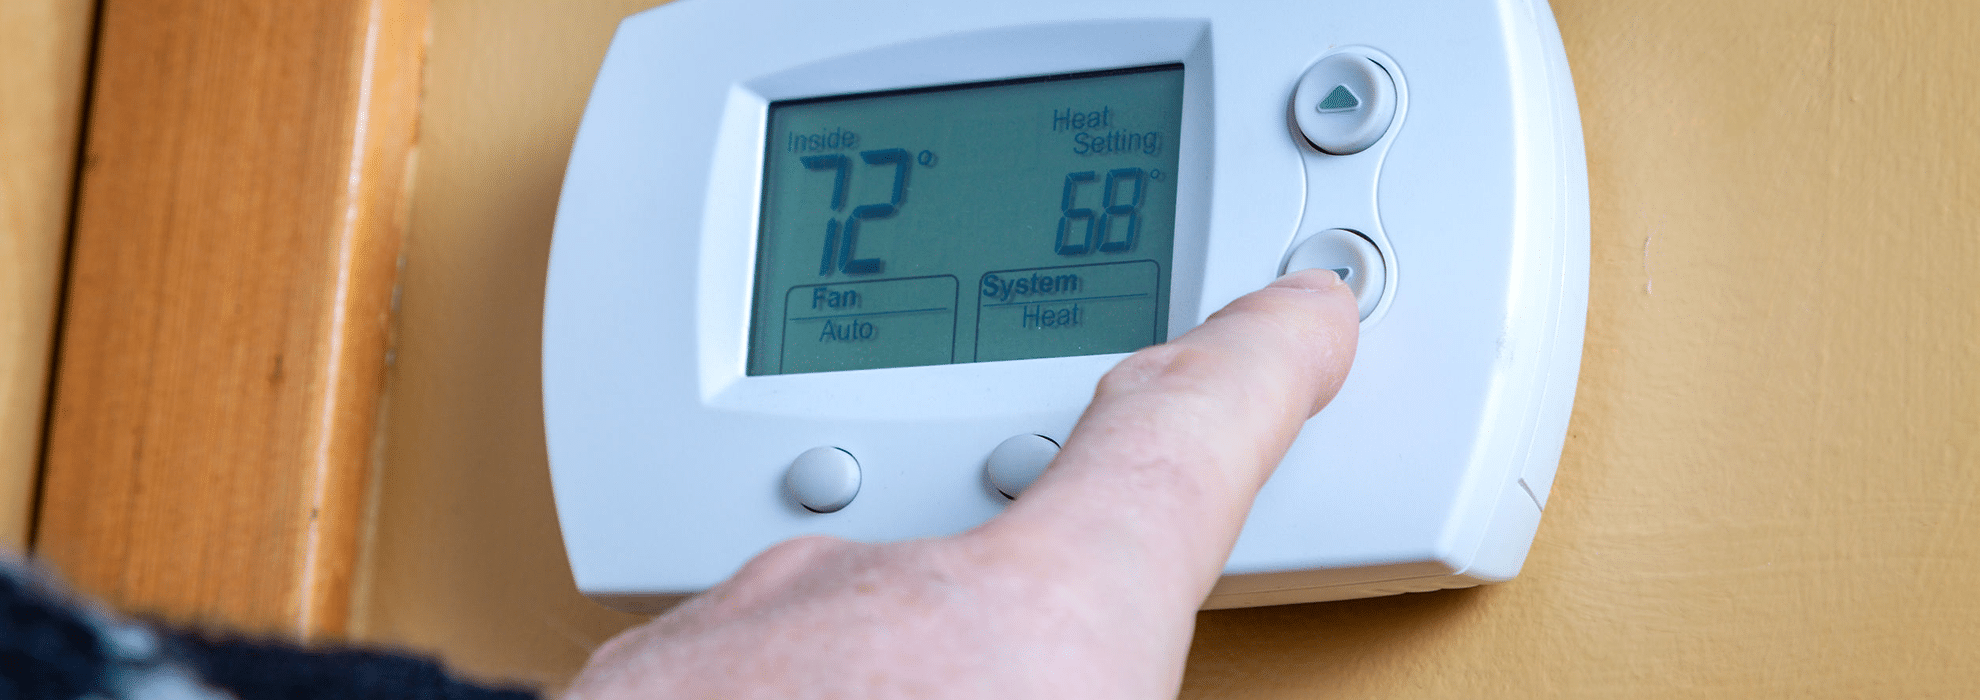 https://apolloheatingandair.com/wp-content/uploads/2020/07/thermostat-auto-vs-on.png